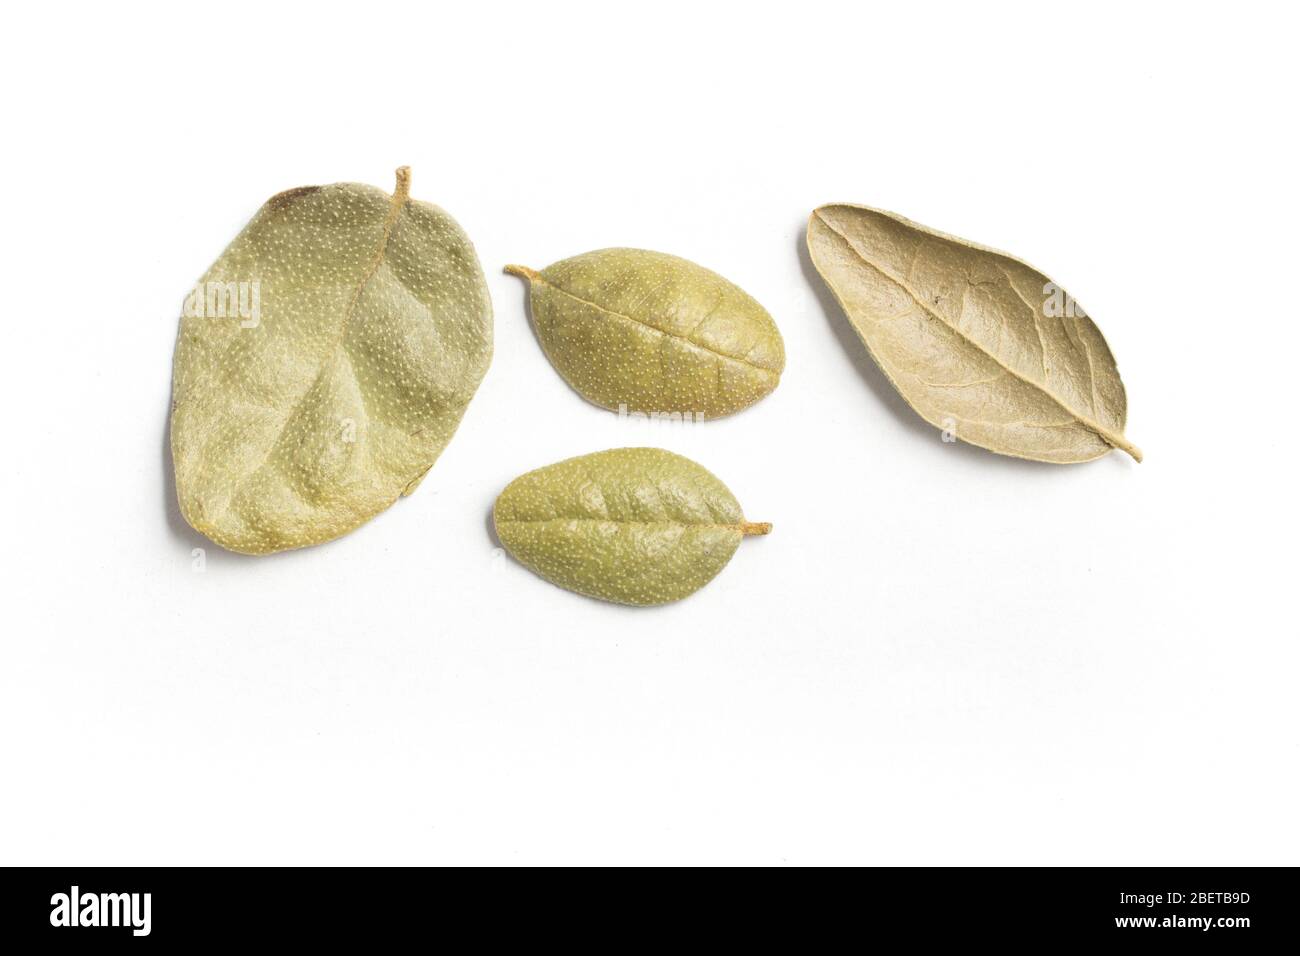 Brazilian Boldo Leaves. Close-up Photo isolated in white background Stock Photo